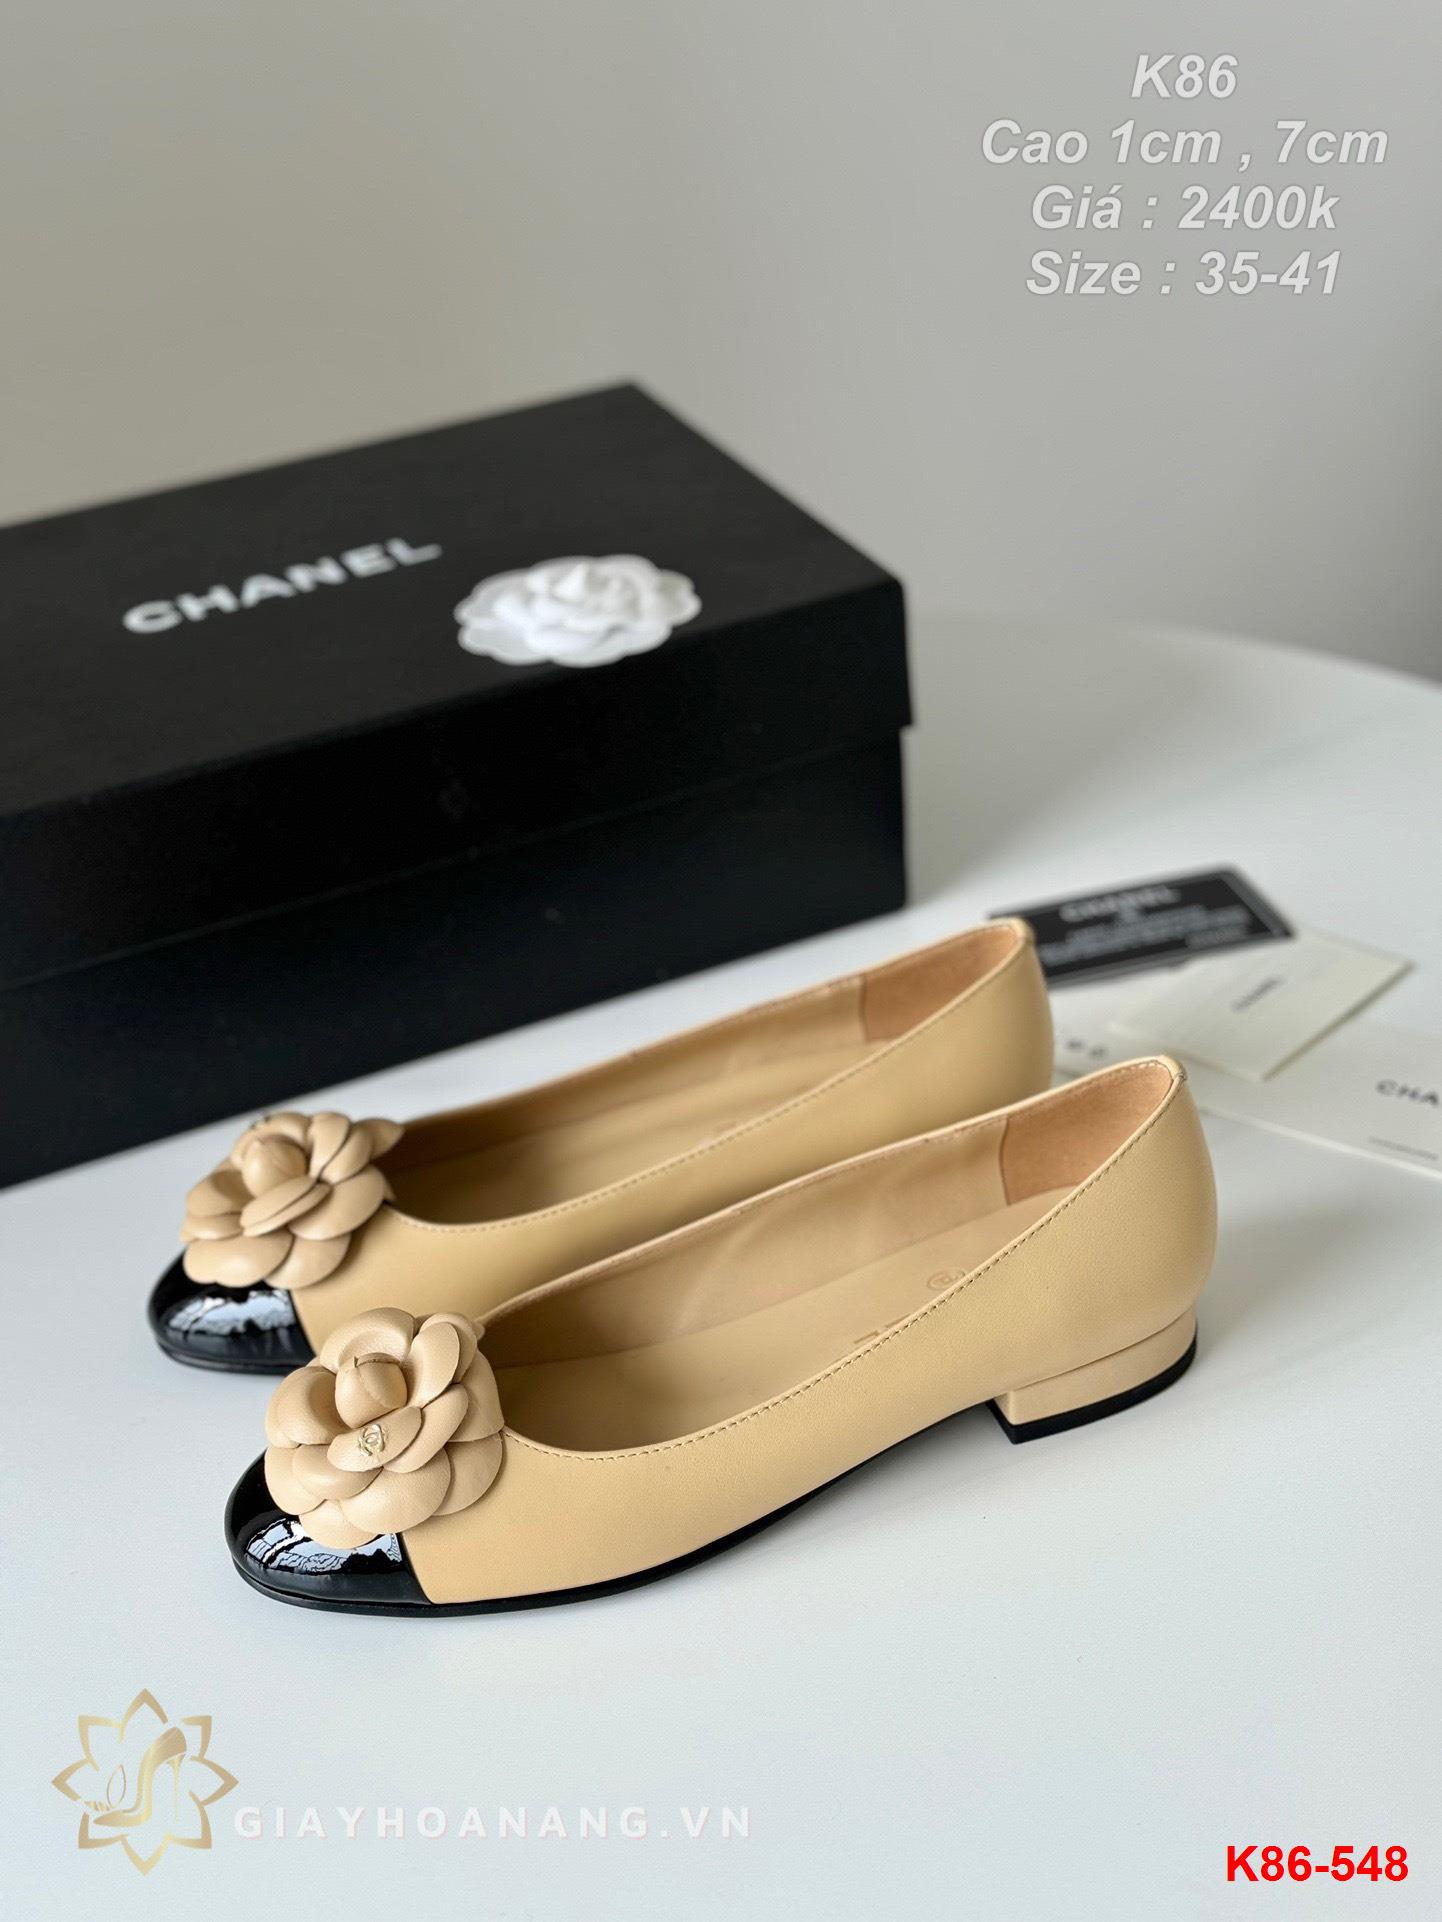 K86-548 Chanel giày cao 1cm , 7cm siêu cấp